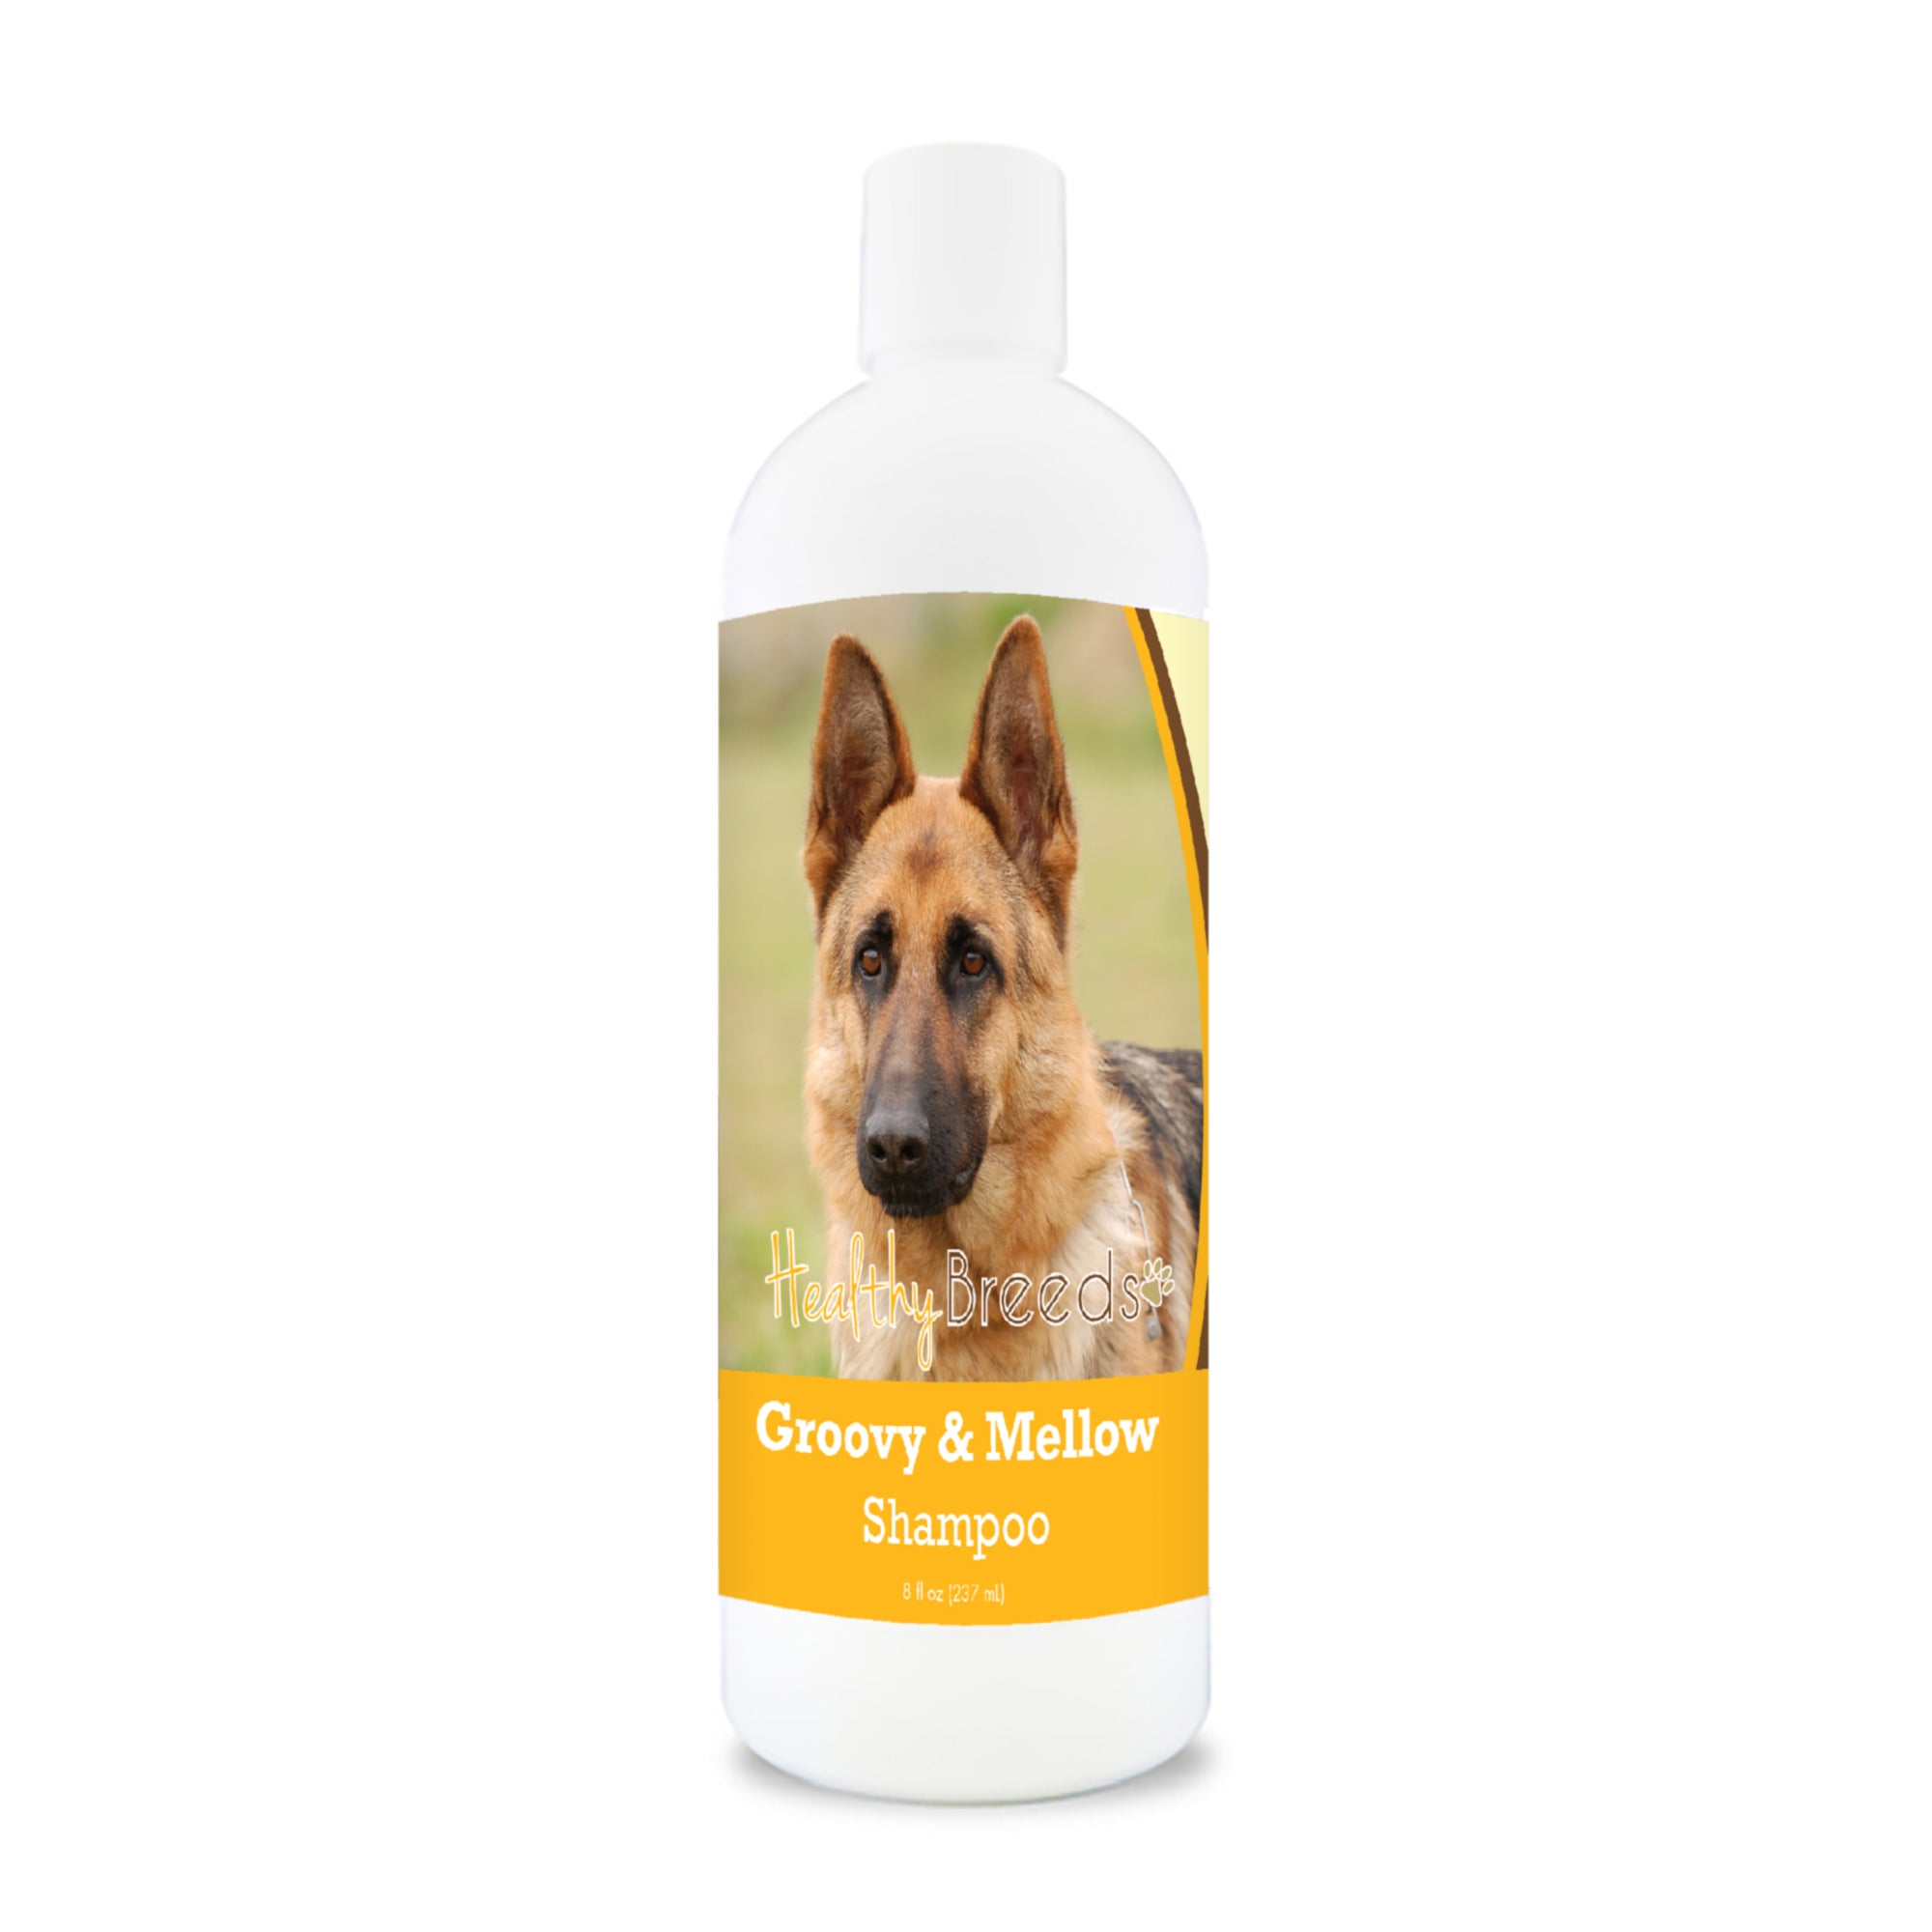 German Shepherd Groovy & Mellow Shampoo 8 oz